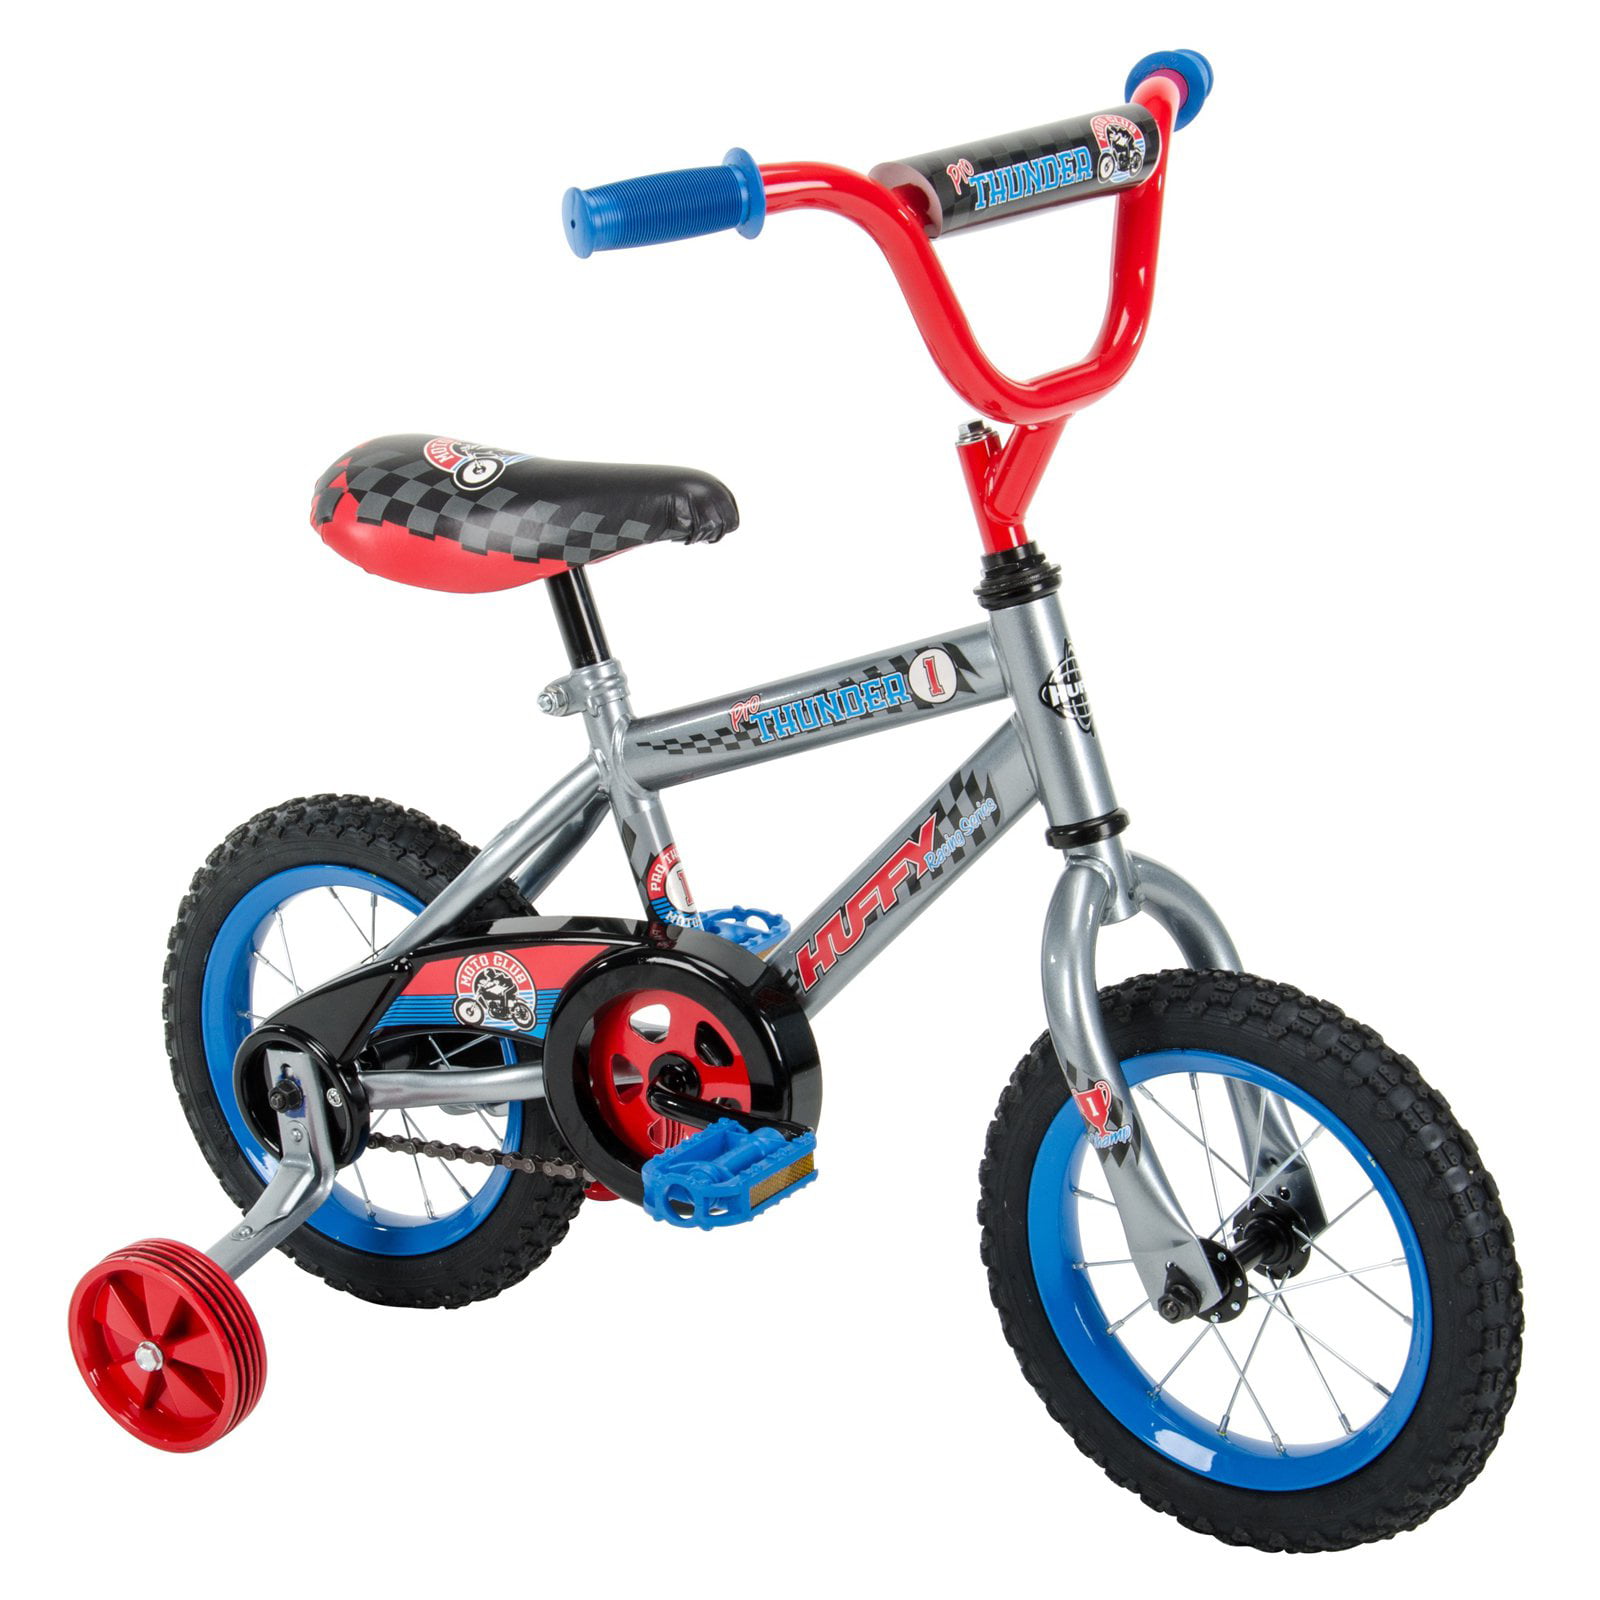 Huffy 12" Pro Thunder Kid Balance Bike With Coaster Brakes Orange for sale online open Box 